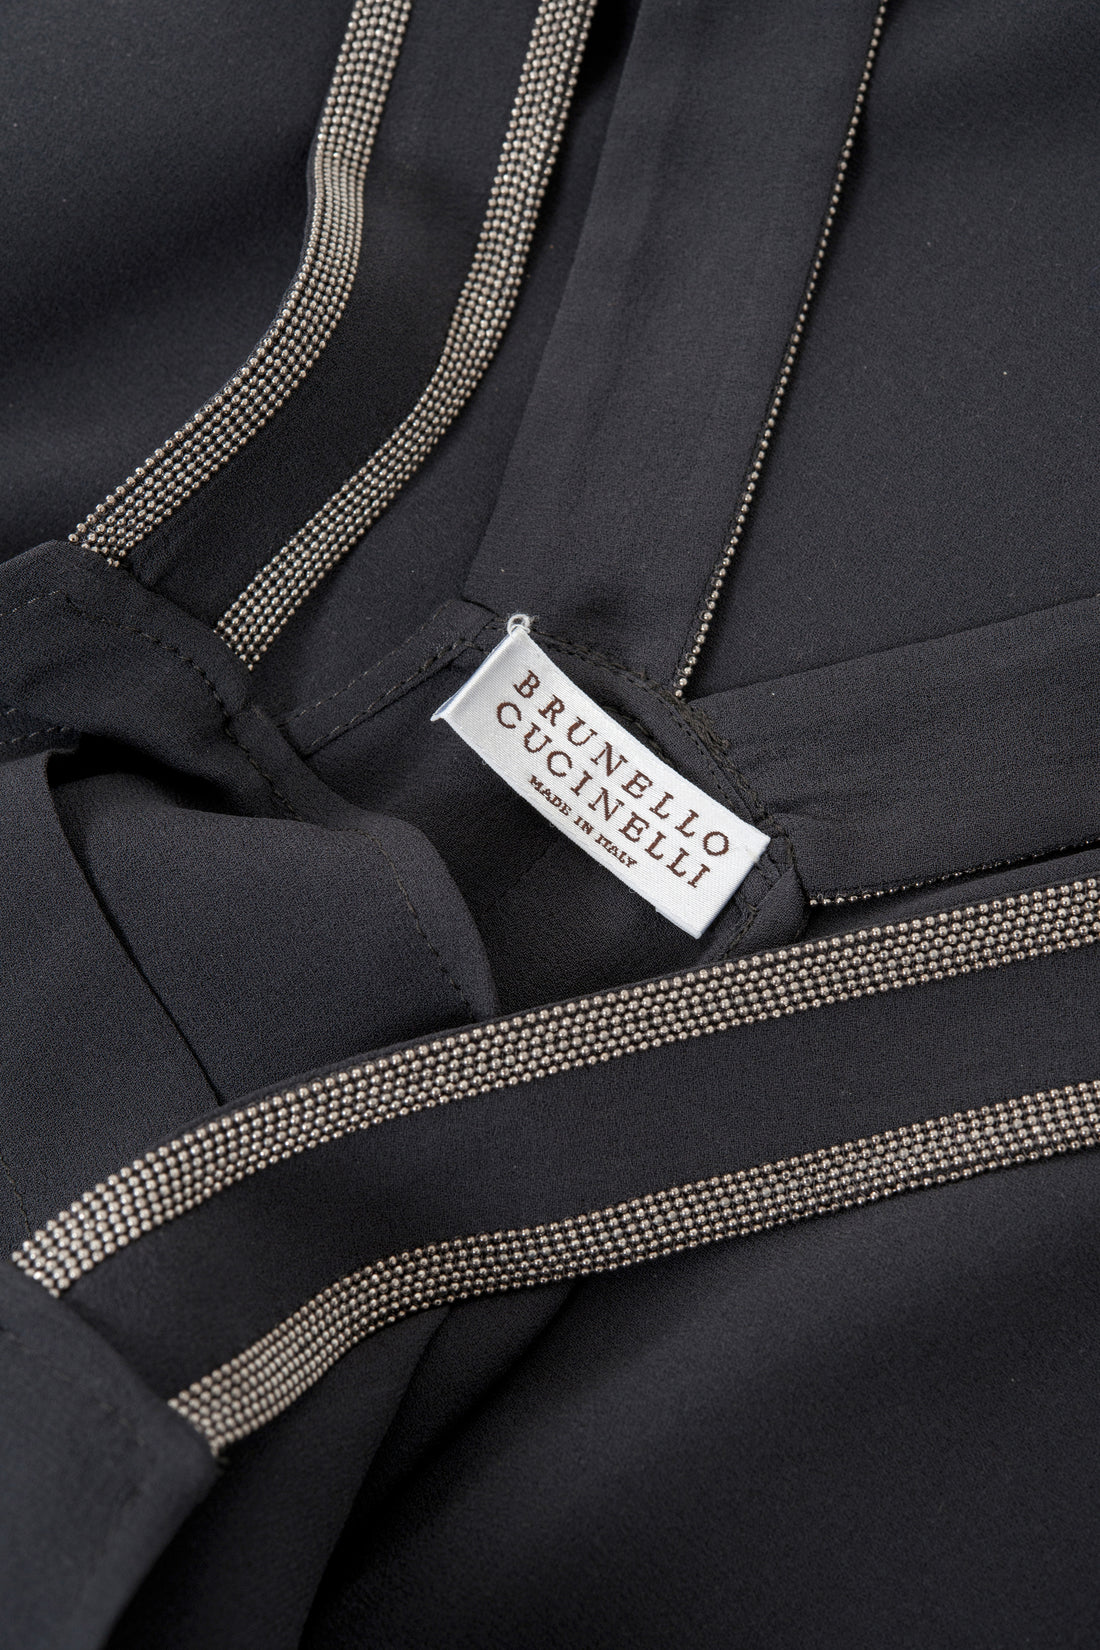 Brunello Cucinelli Grey Long Silk Overalls Maxi Dress